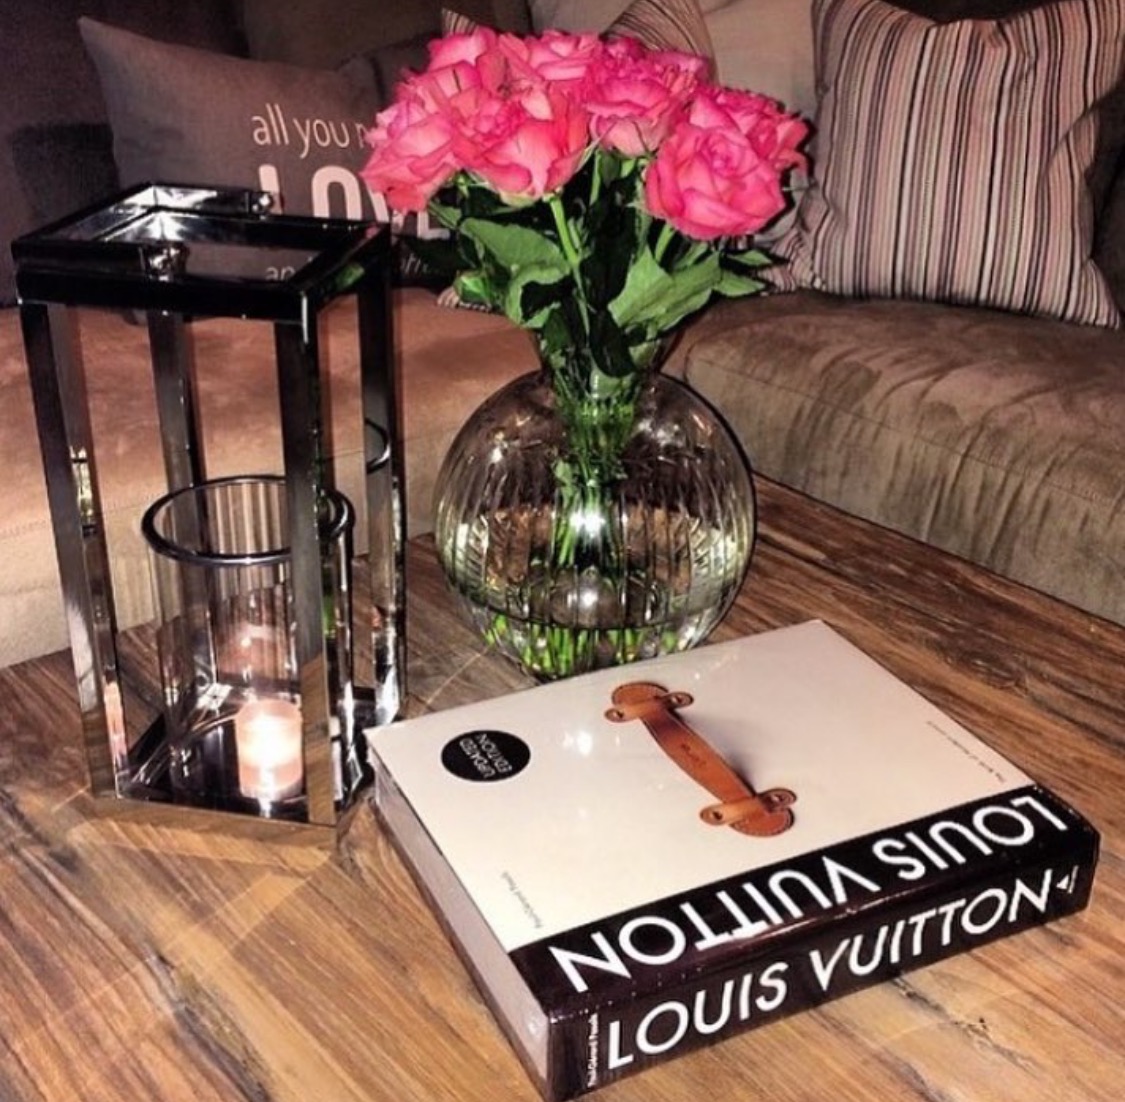 Koffietafelboek - Louis Vuitton Catwalk Collection